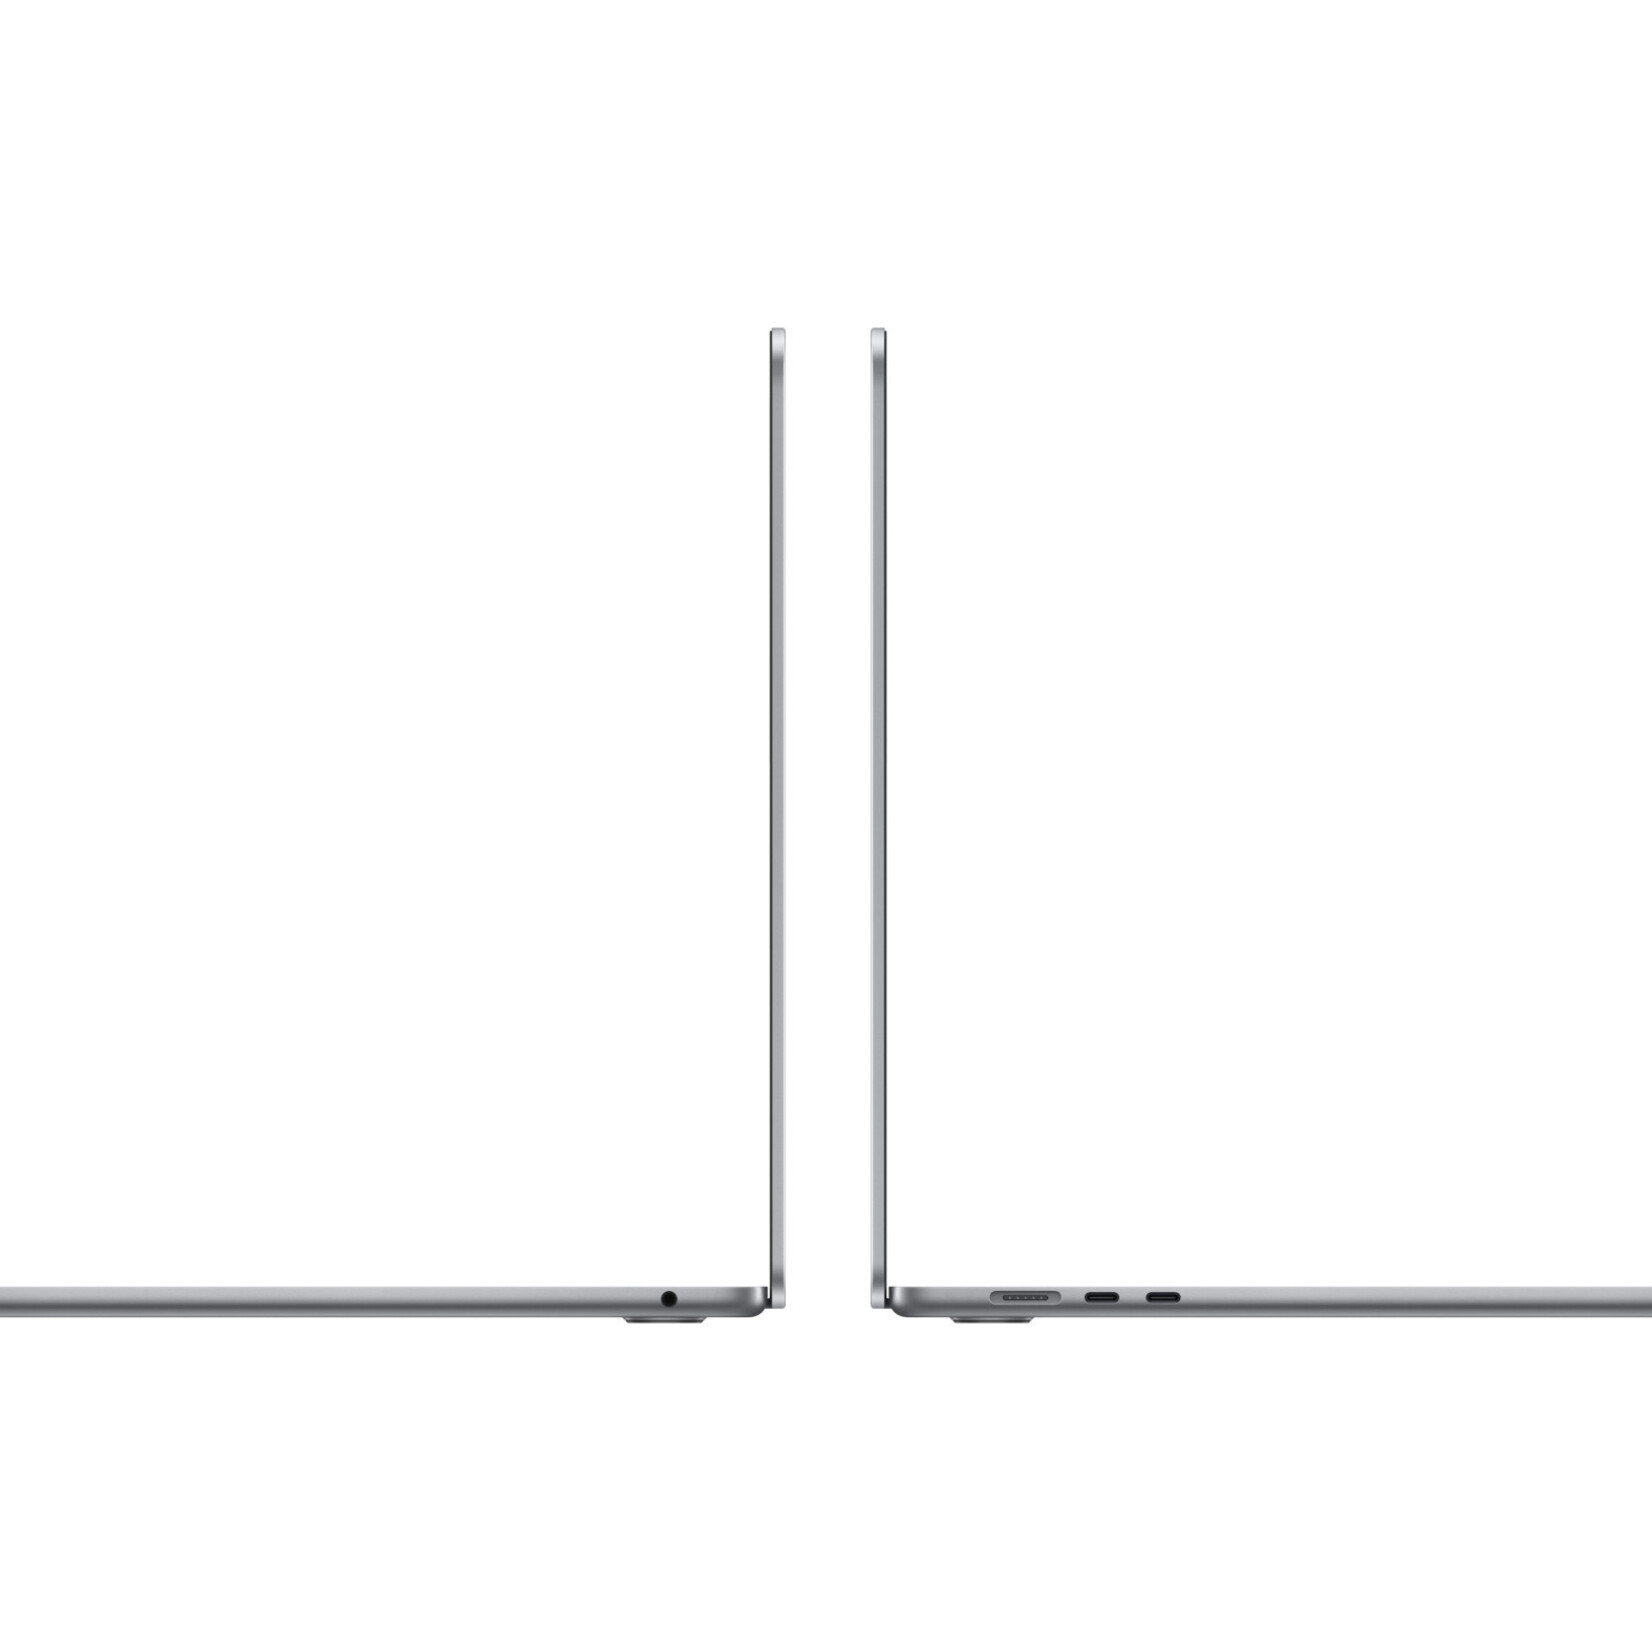 Apple *15-inch MacBook Air - 512GB - Space Gray